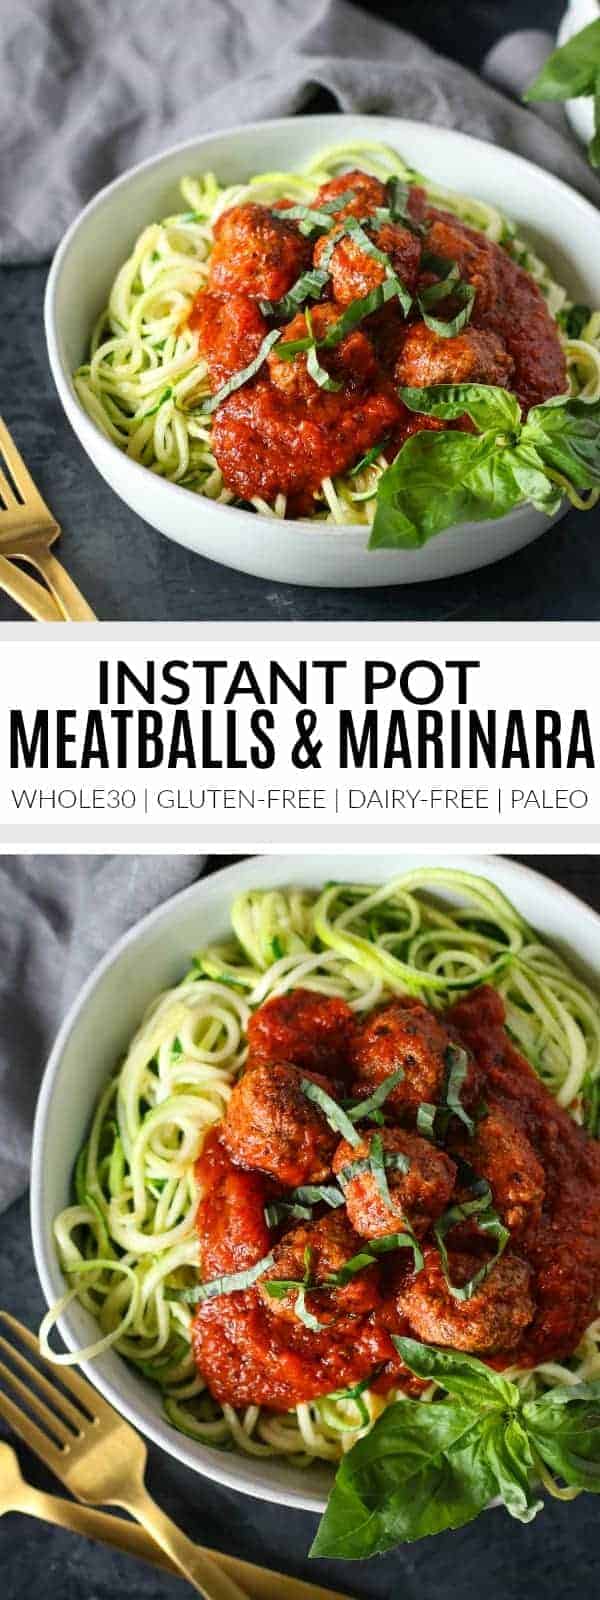 Pinterest image for instant pot meatballs and marinara